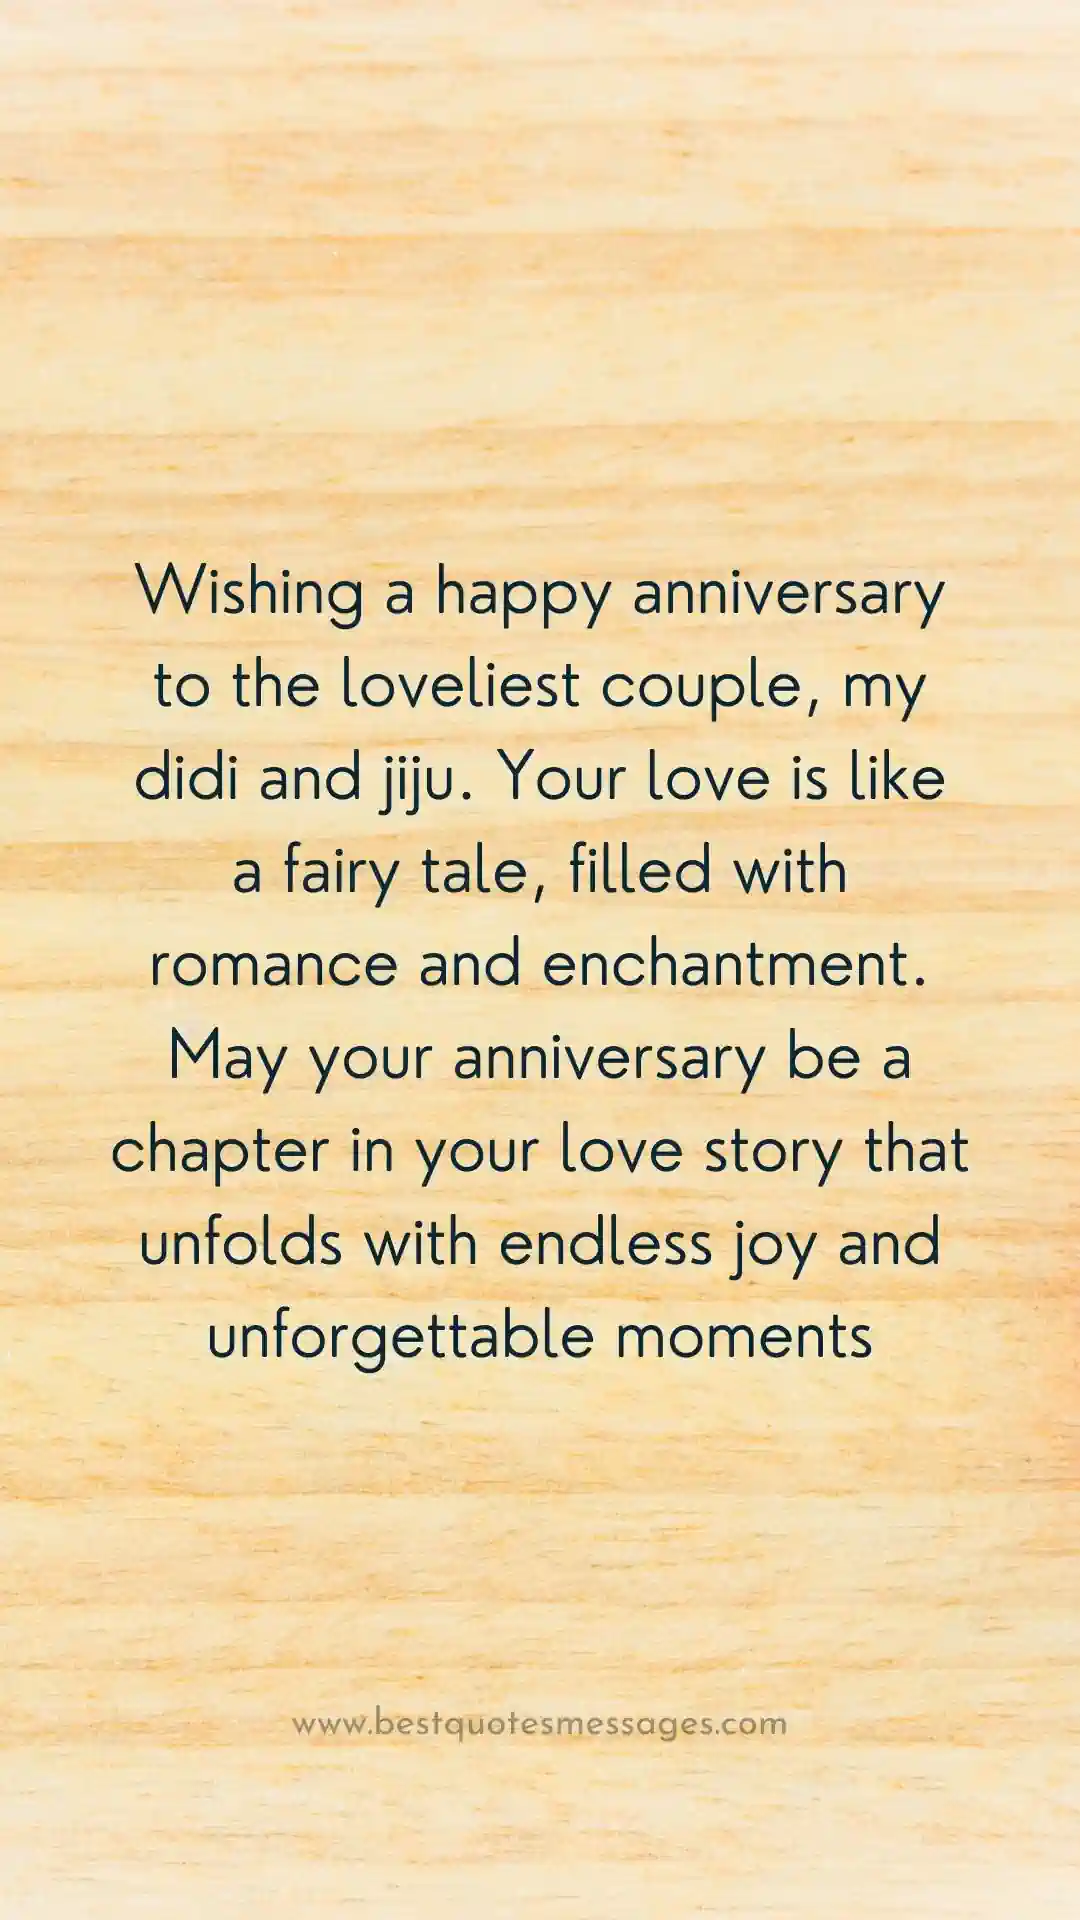 marriage anniversary quotes didi